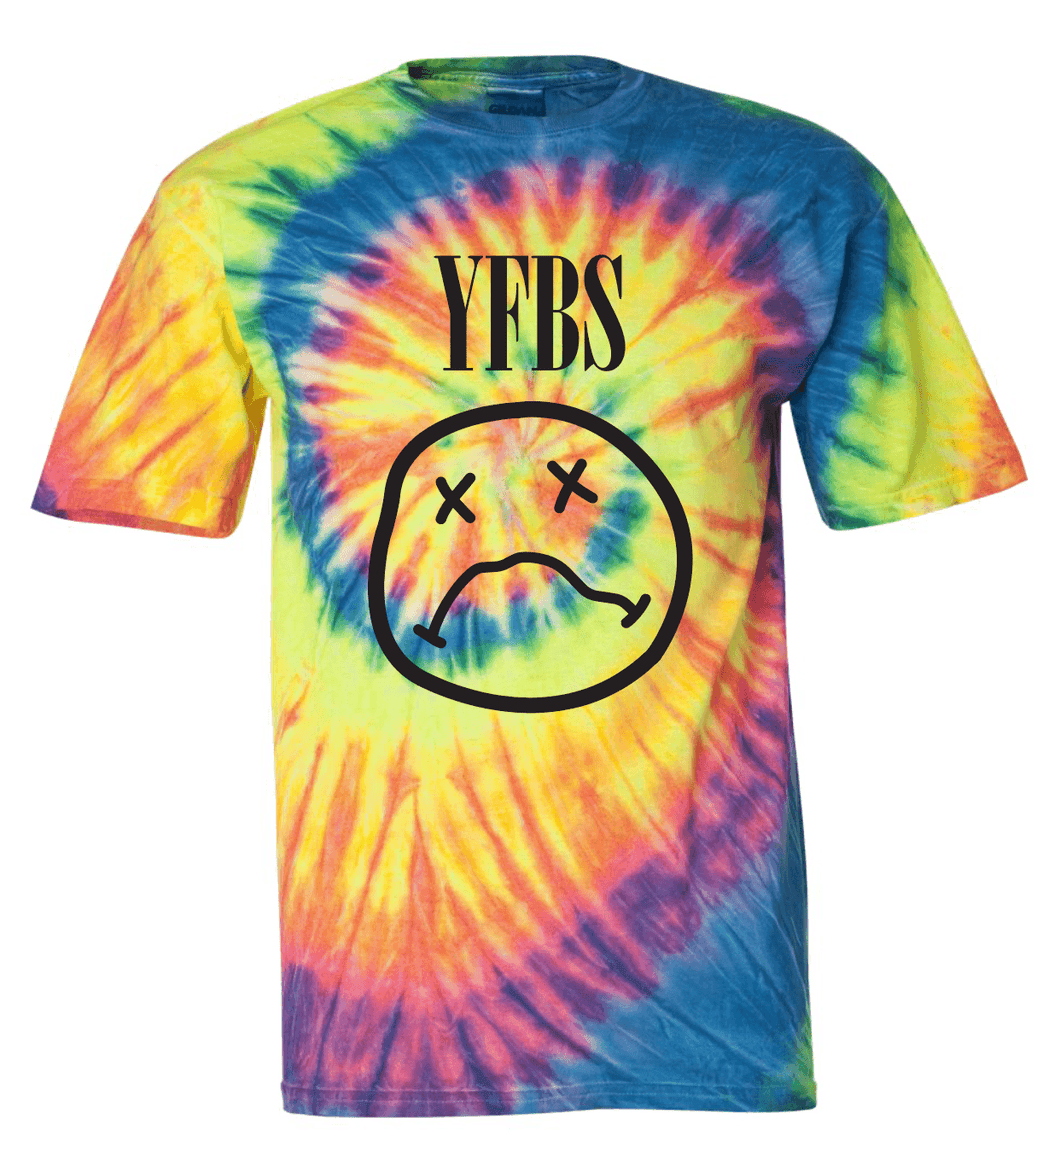 YFBS Sad Face Tie Dye Shirt - Your Favorite Band Sucks